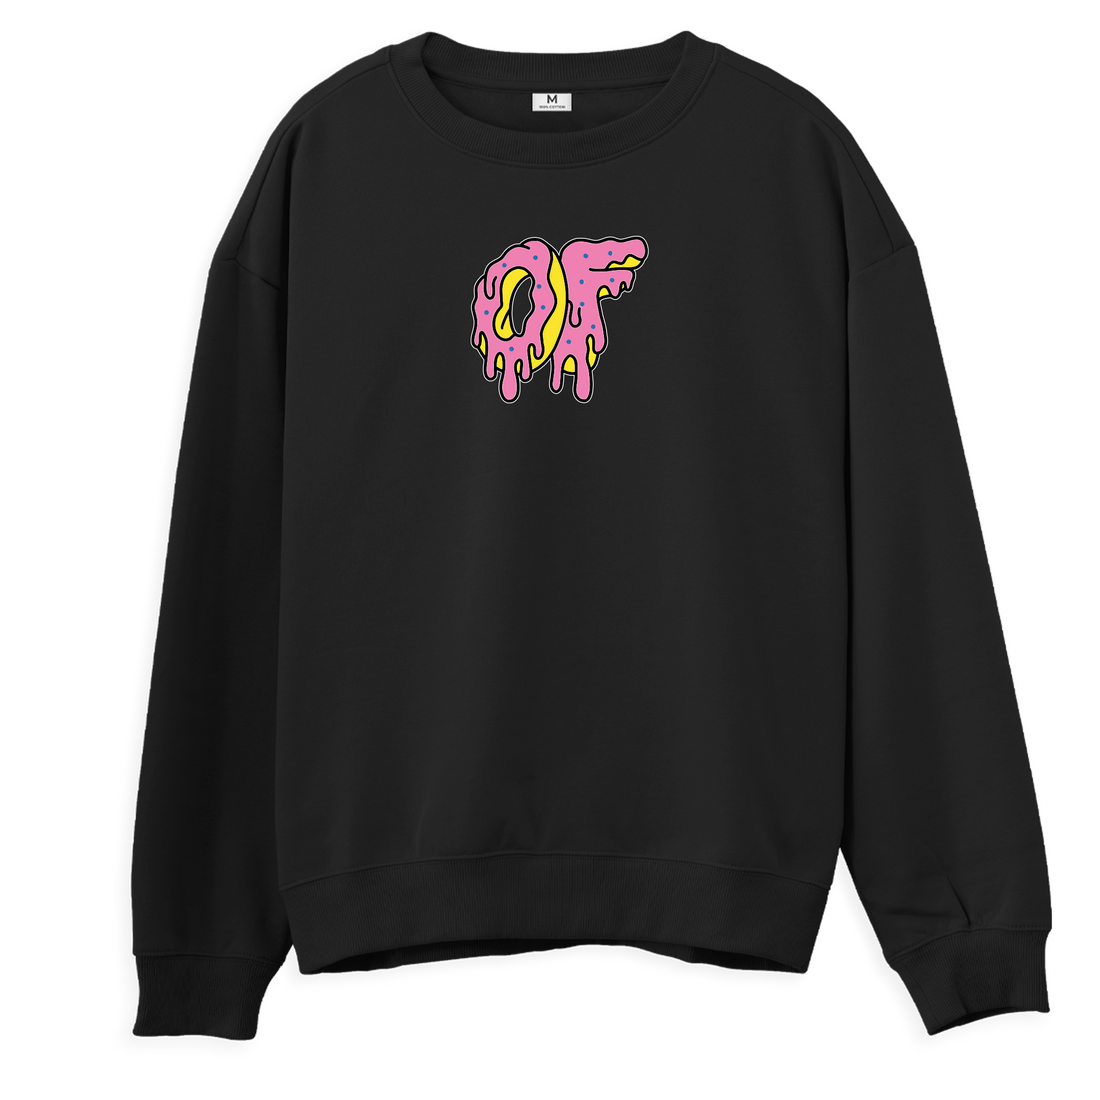 Odd Future - Sweatshirt